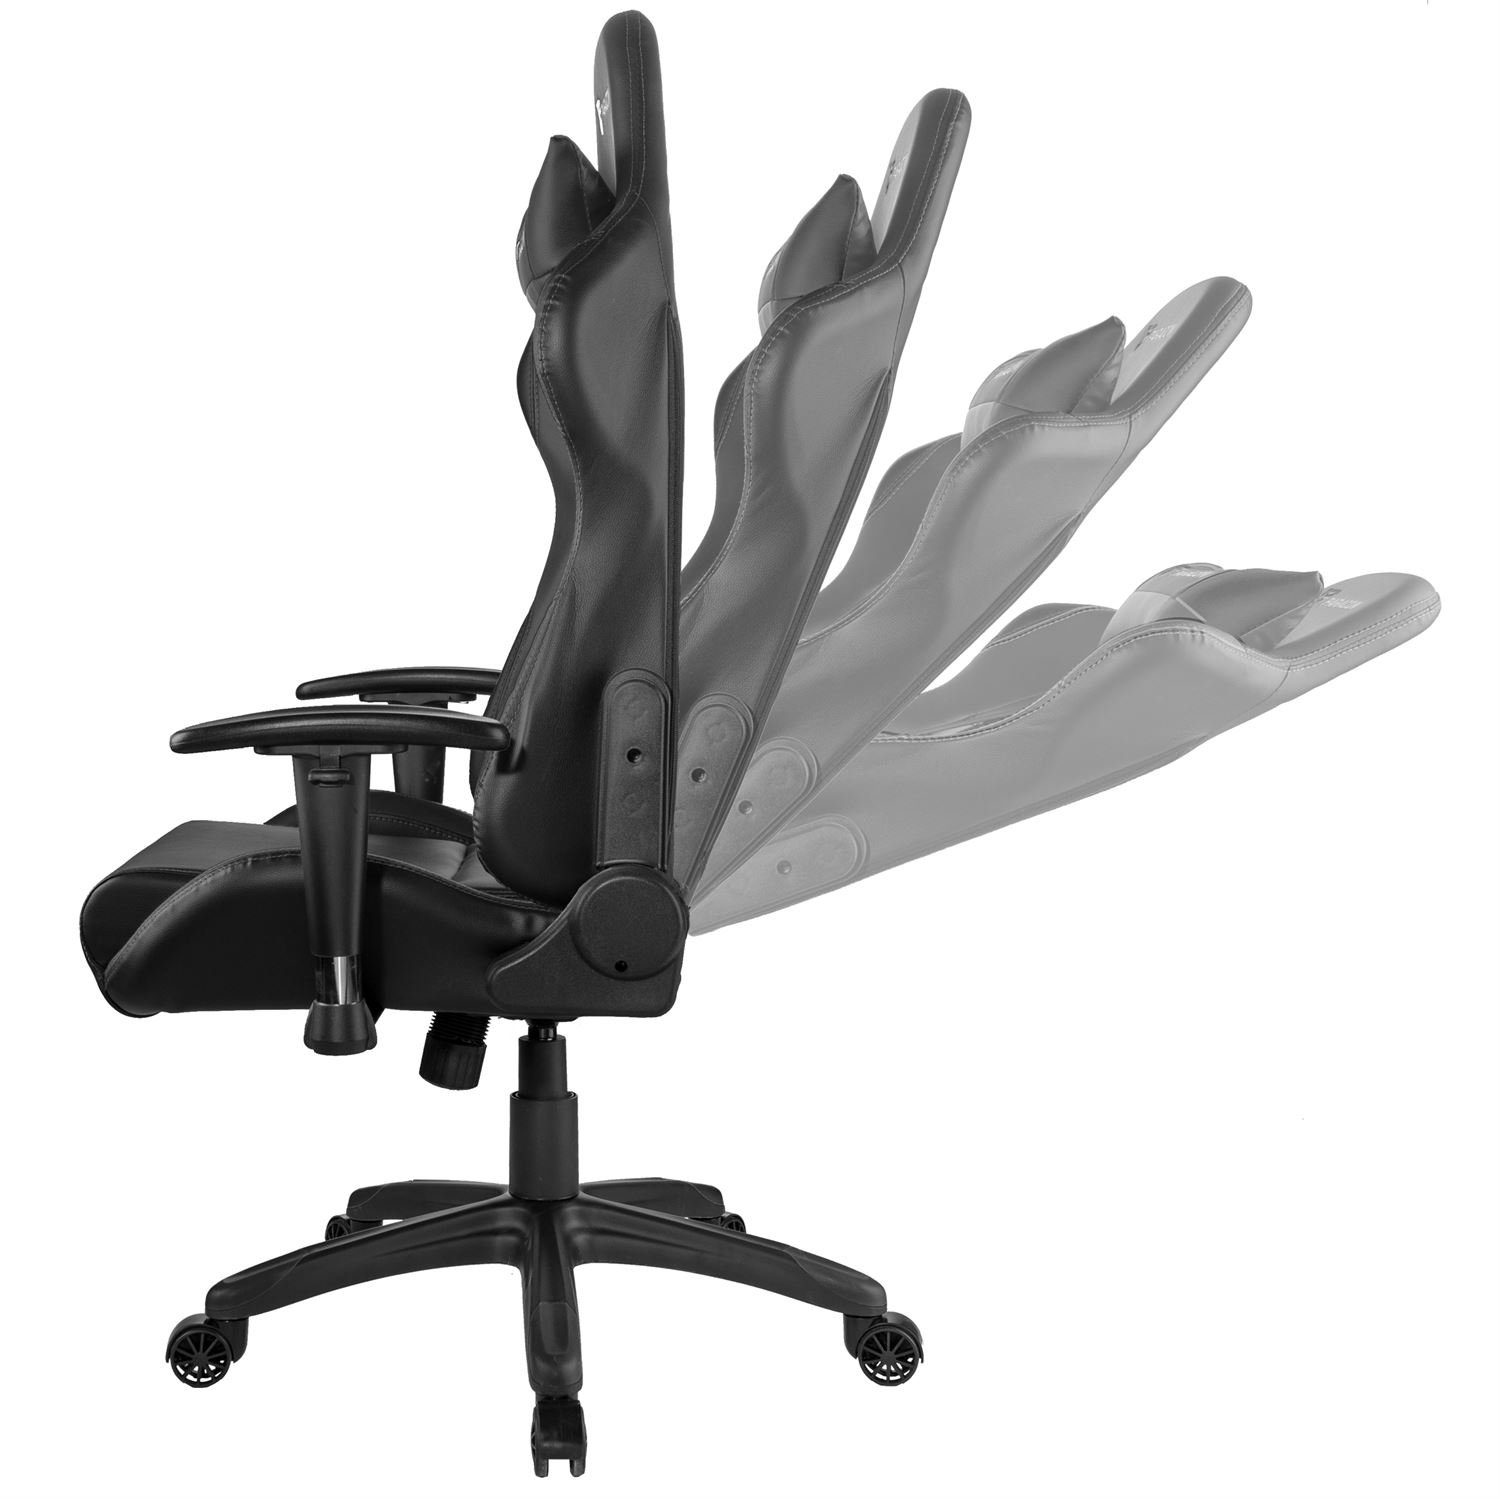 Schwarz Gaming-Stuhl Stuhl Rogue Paracon Nackenkissen inkl. Gaming ebuy24 und